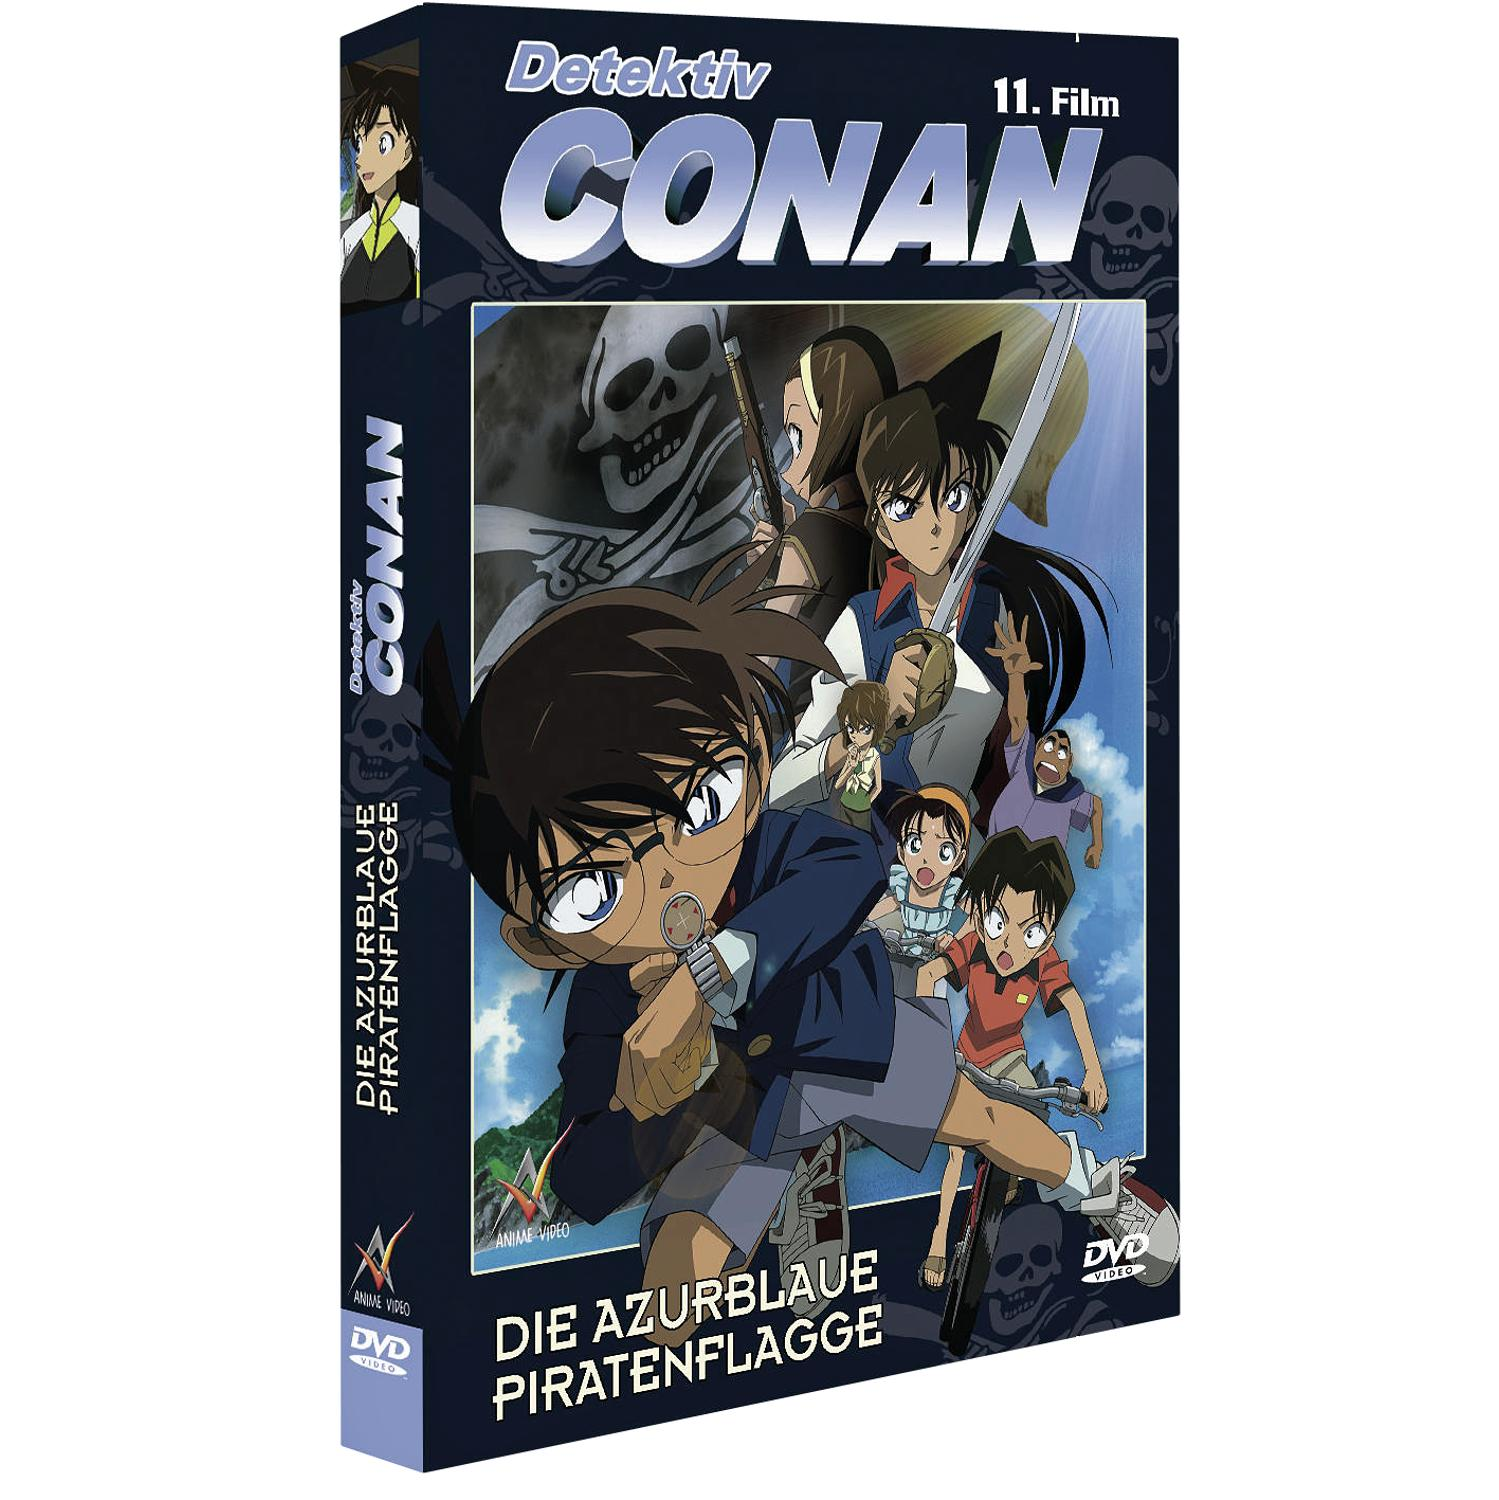 Detektiv Conan - 11. Film: DVD Die Piratenflagge azurblaue